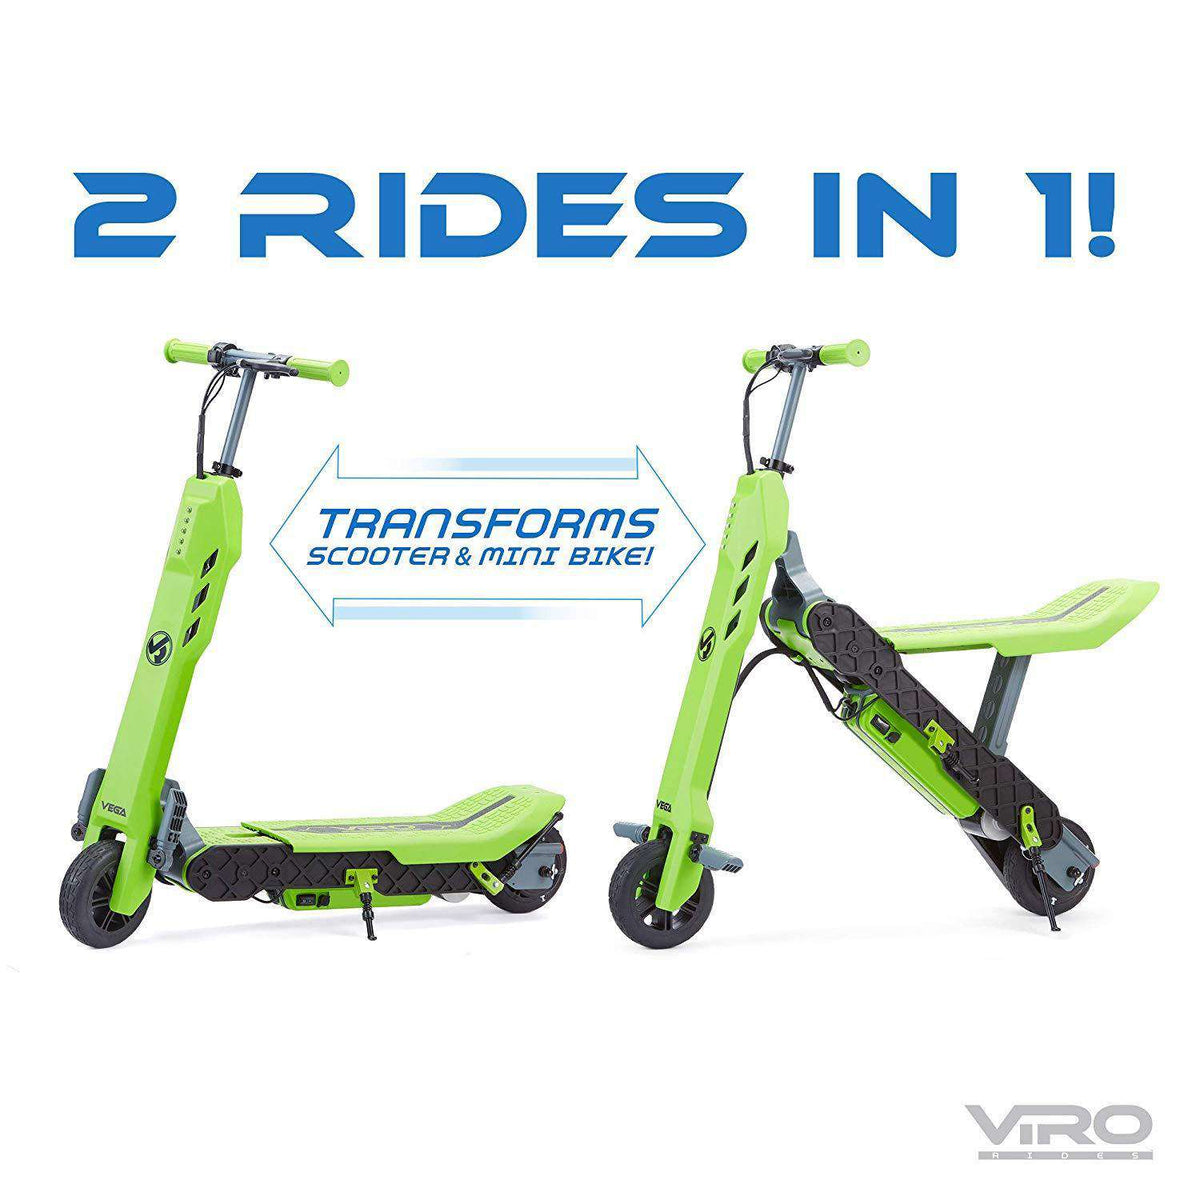 Little Tikes Viro Rides Vega 2-N-1 Transforming Electric Scooter Green New